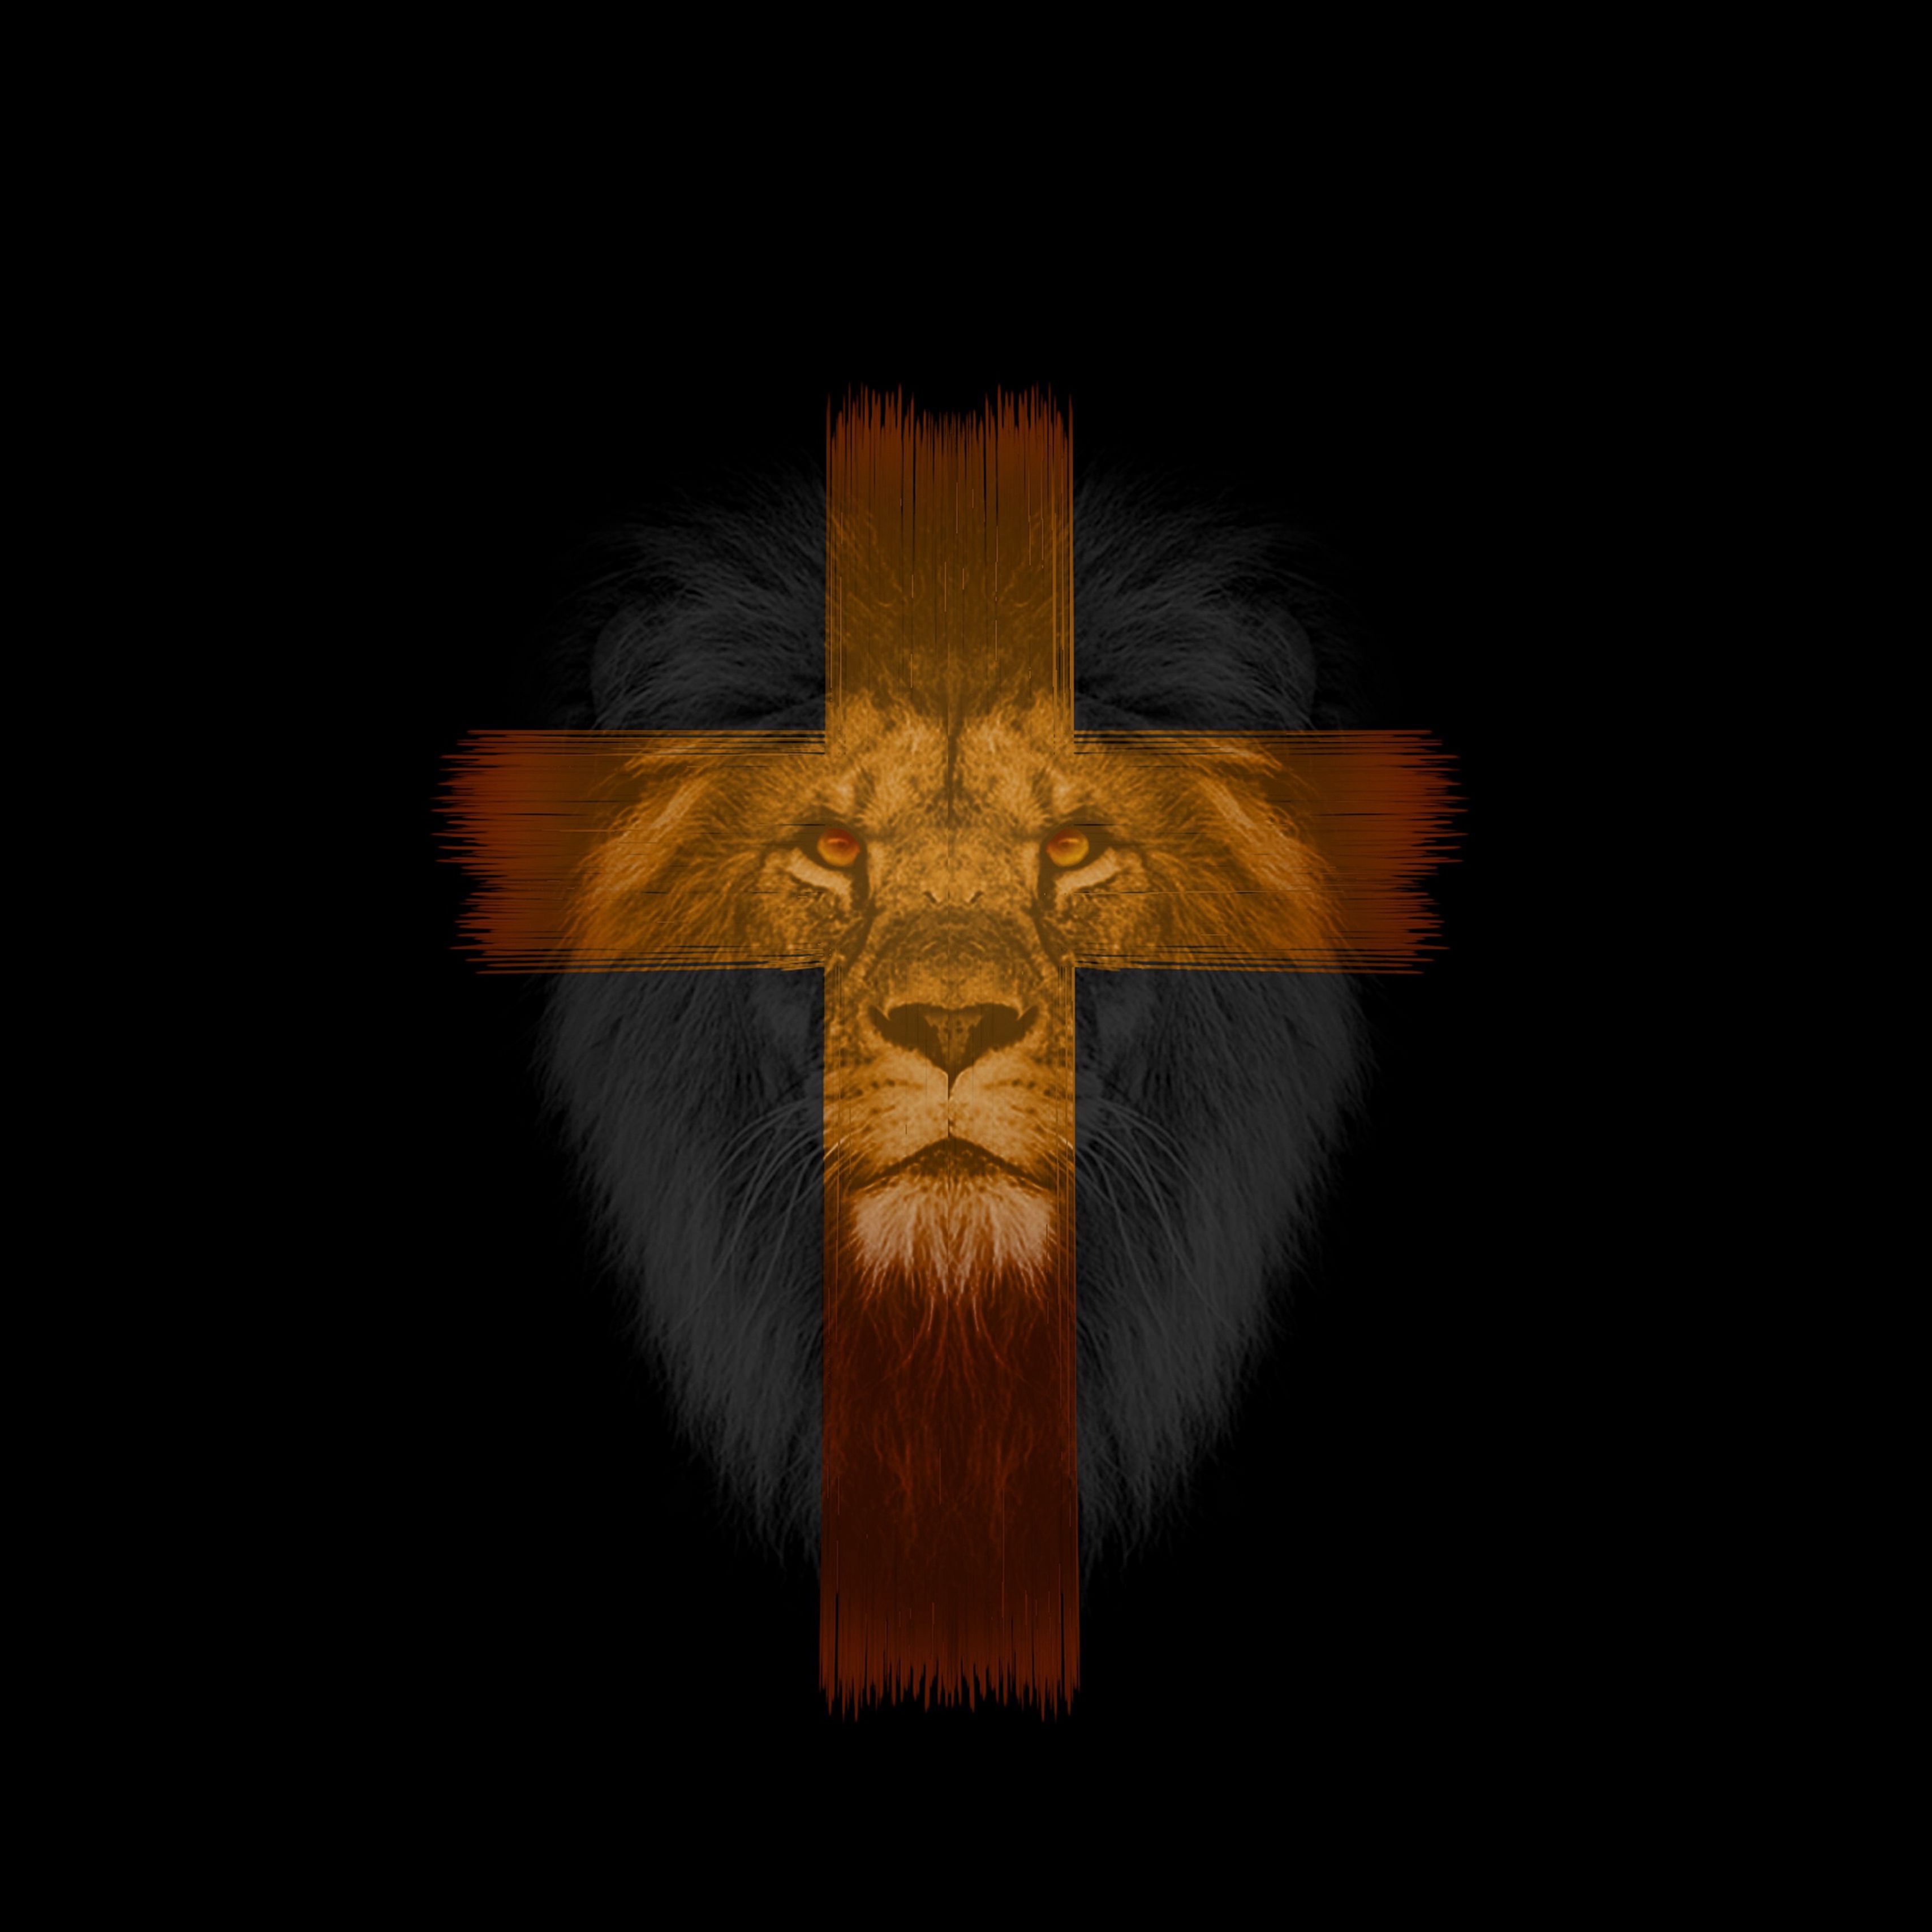 Download wallpaper 3415x3415 lion, cross, muzzle, dark ipad pro 